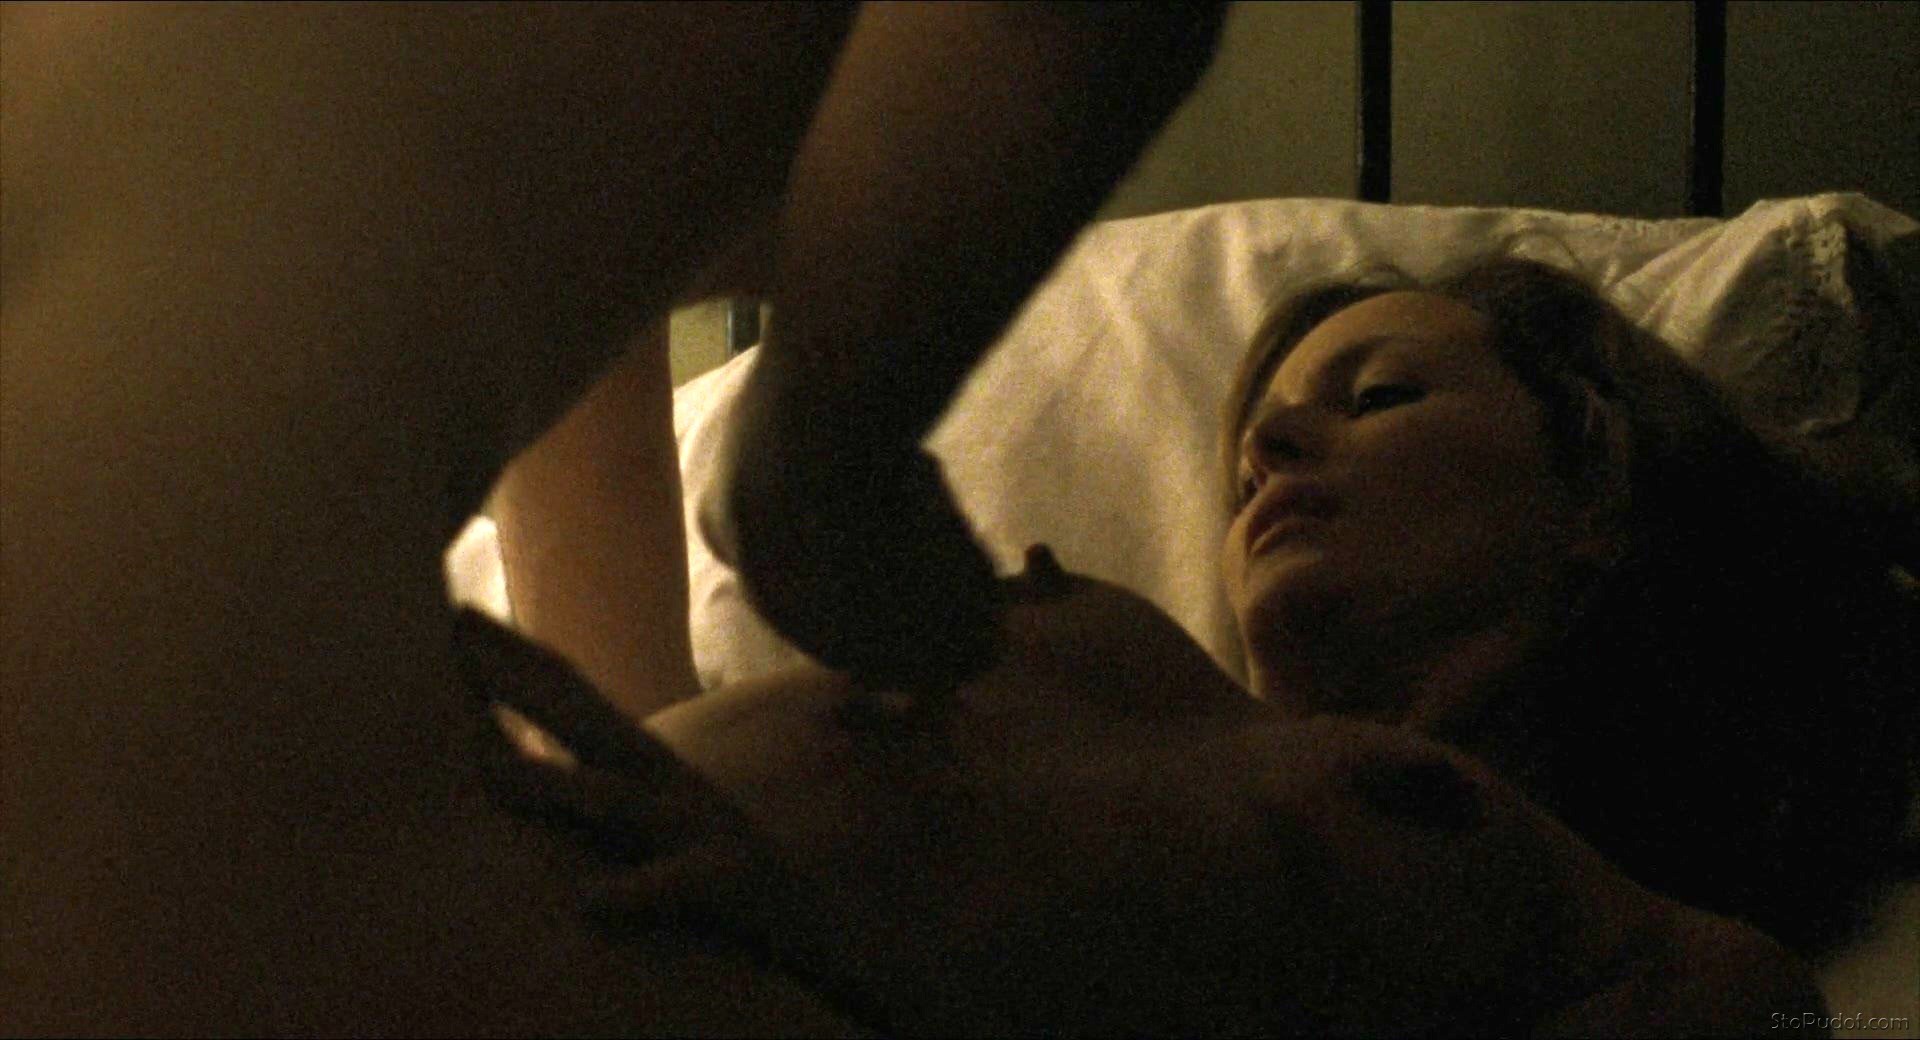 Gillian Anderson uncensored naked photos - UkPhotoSafari